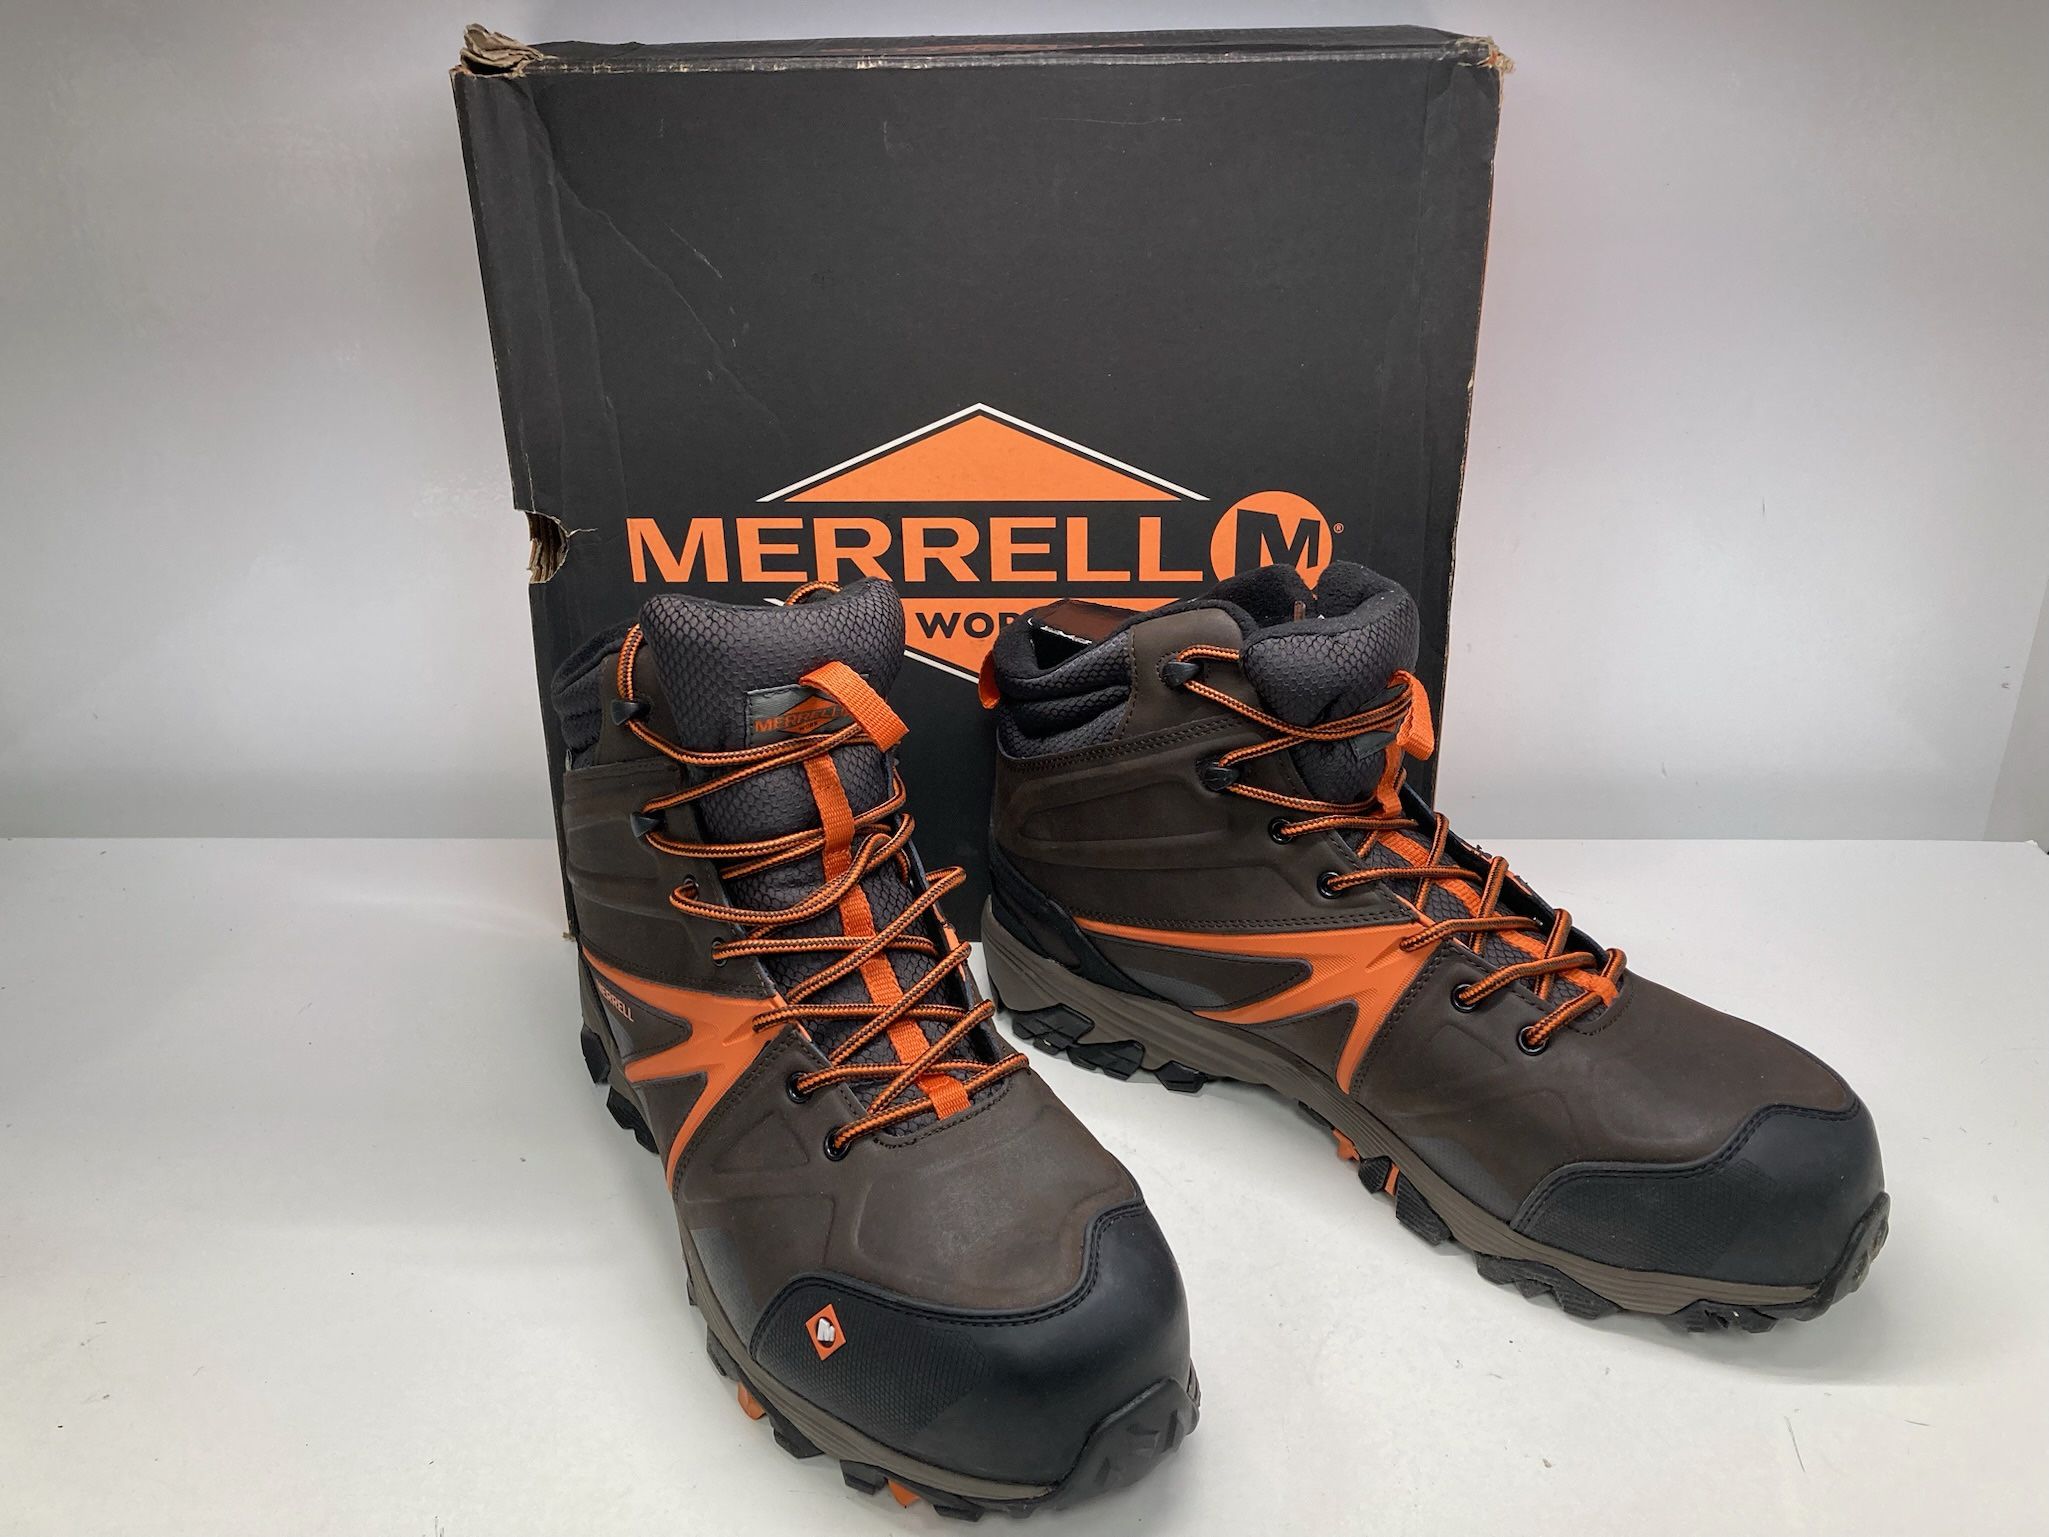 Merrell J15729 Trailwork Mid CT Hiking/Work Waterproof Boots